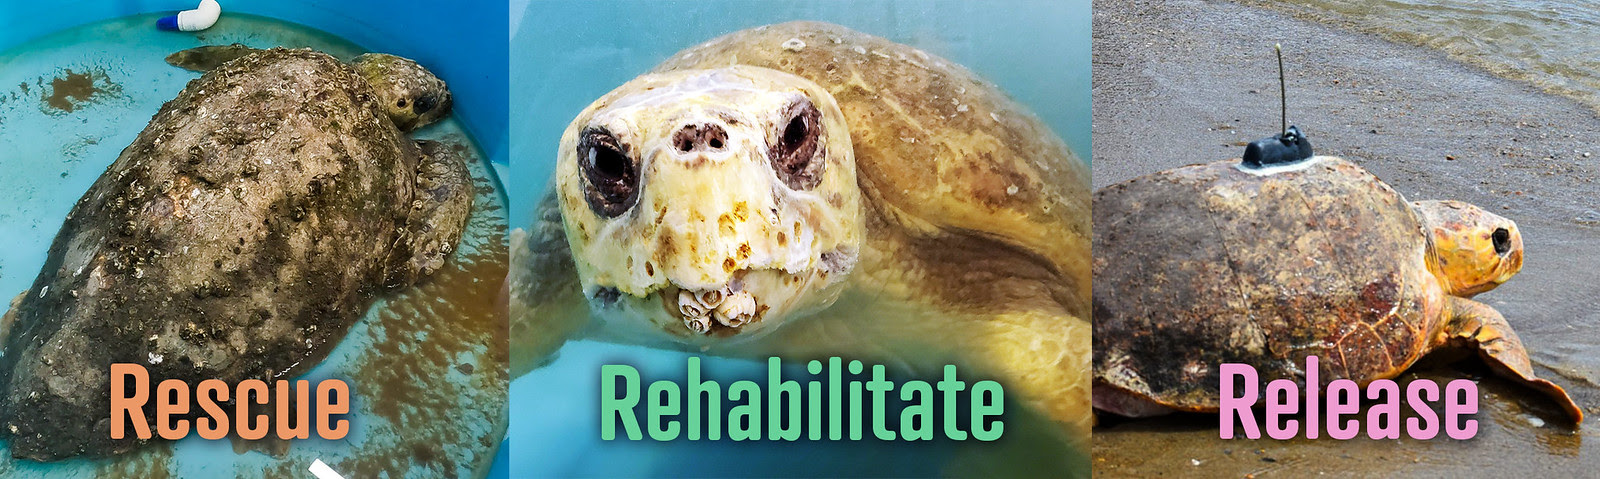 Rescue Rehabilitate Release